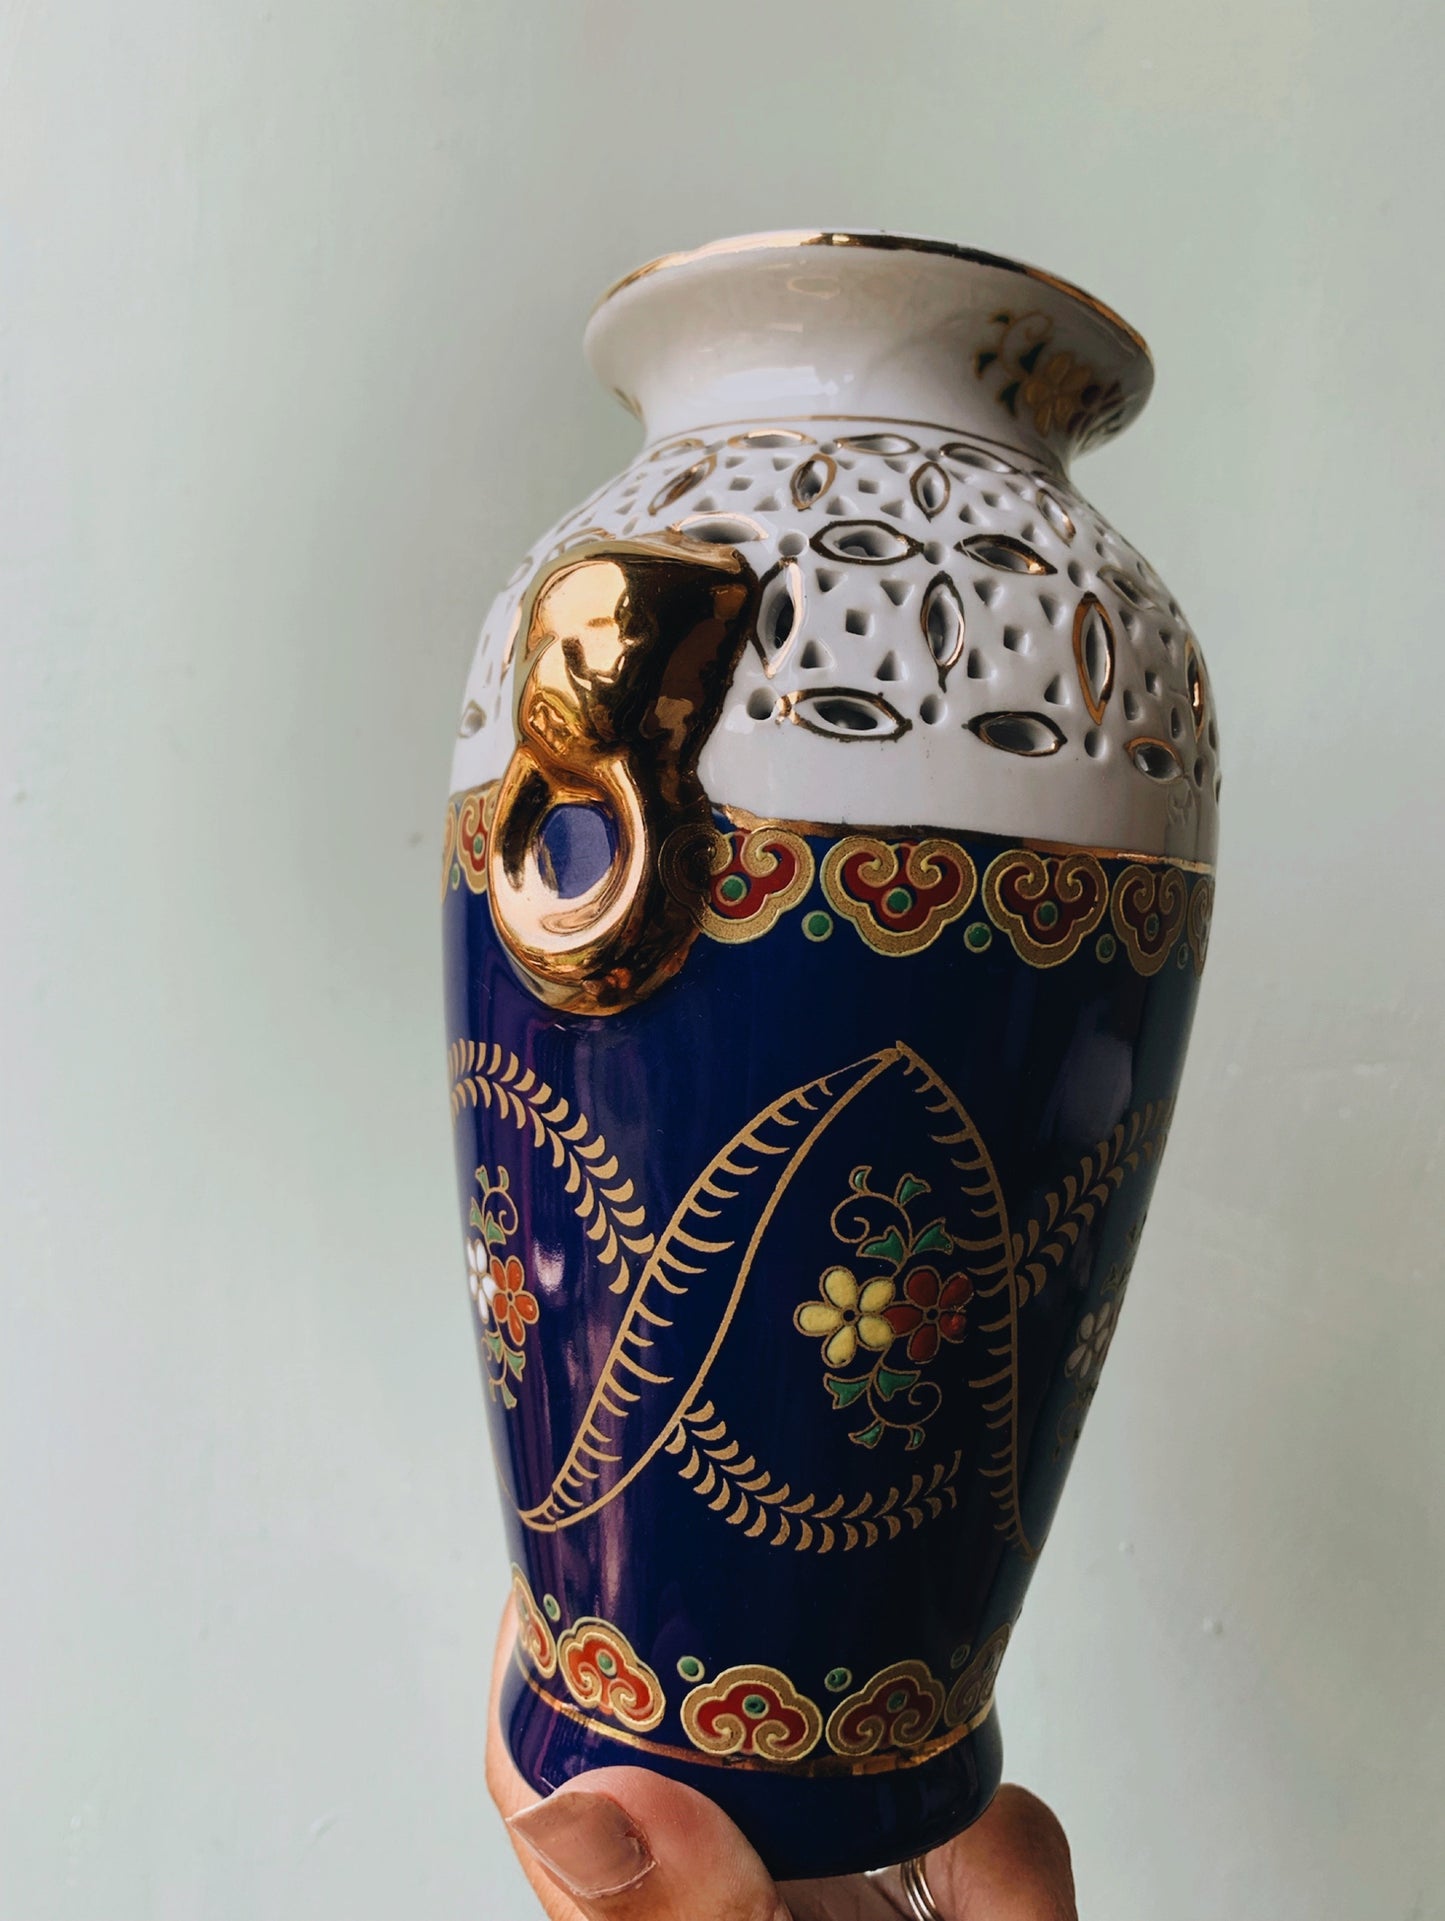 Vintage Decorative Rocco Vase with Gilt Detailing